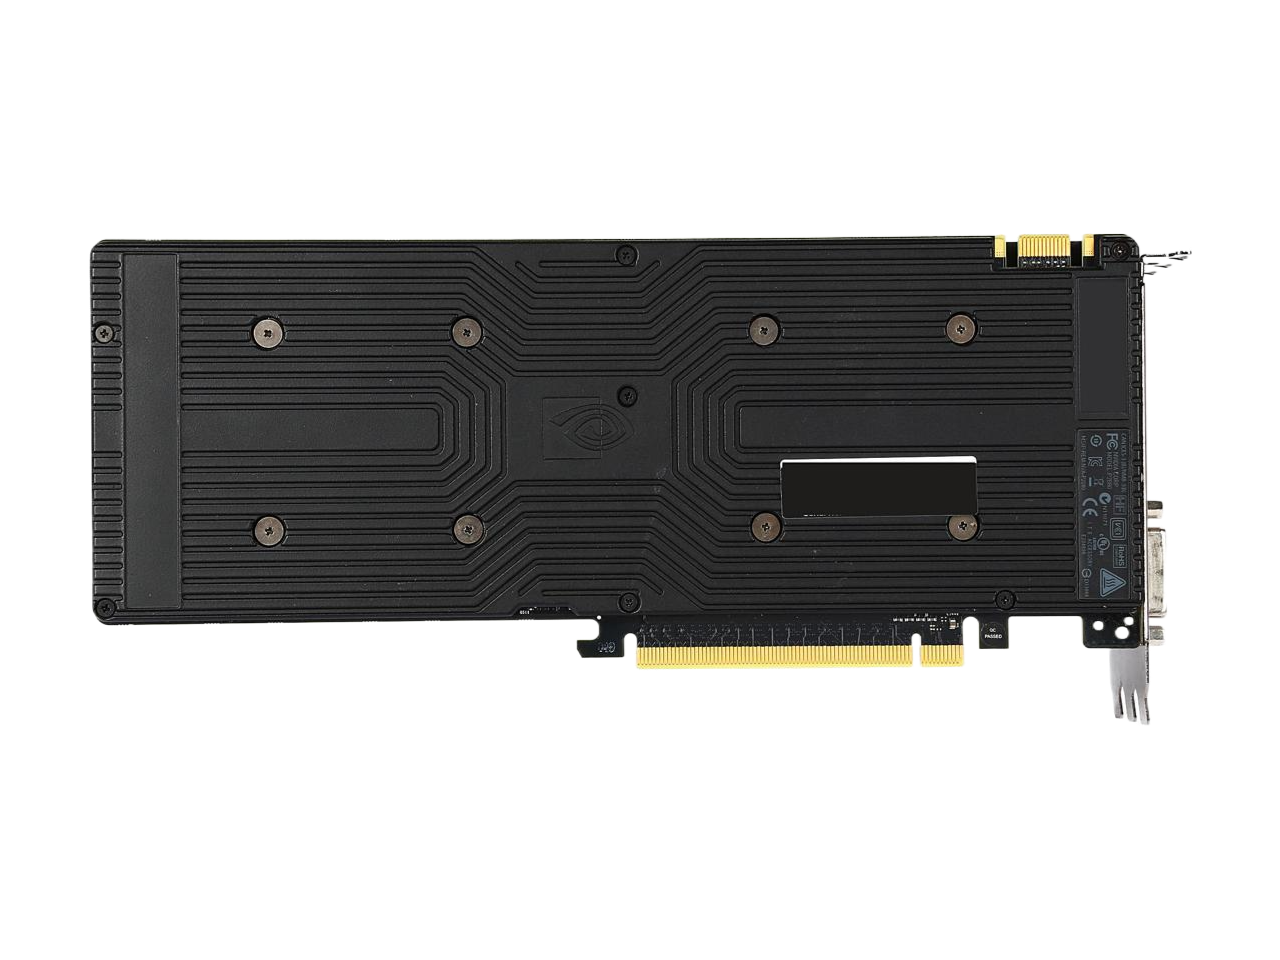 EVGA GeForce GTX TITAN Z 12GB SC GAMING, Fastest NVIDIA GPU Graphics Card 12G-P4-3992-KR